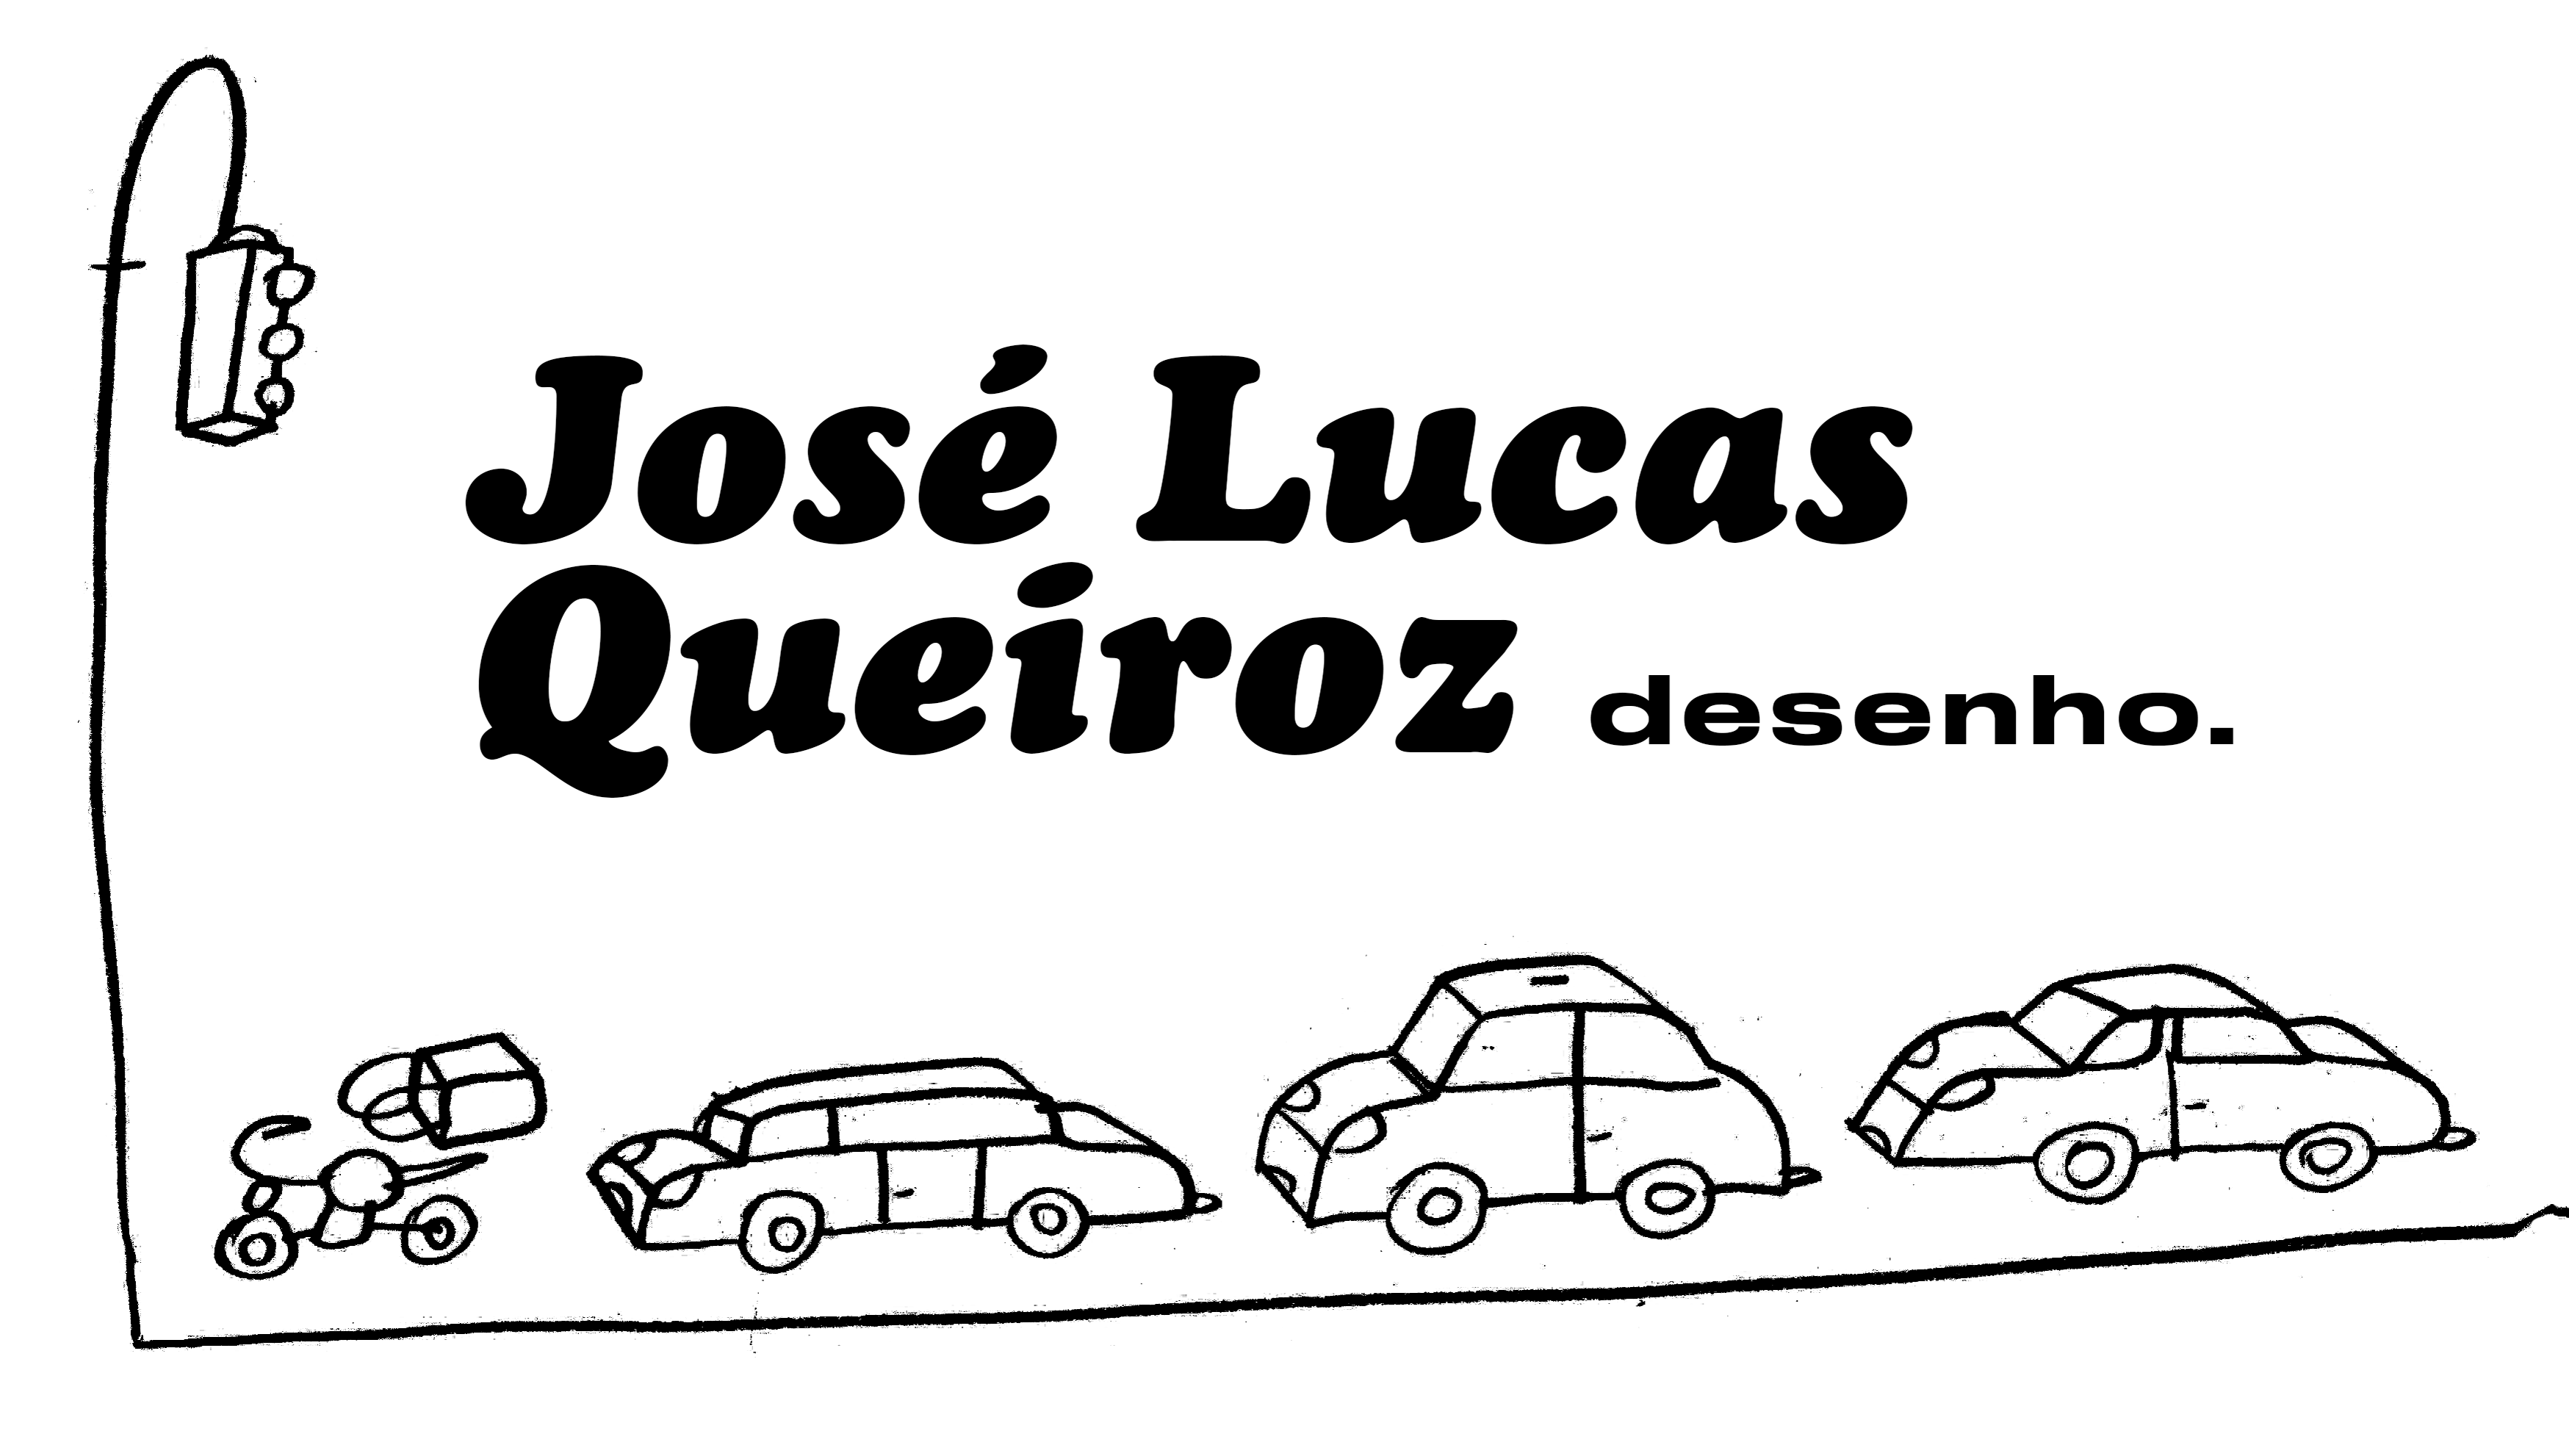 José Lucas Queiroz